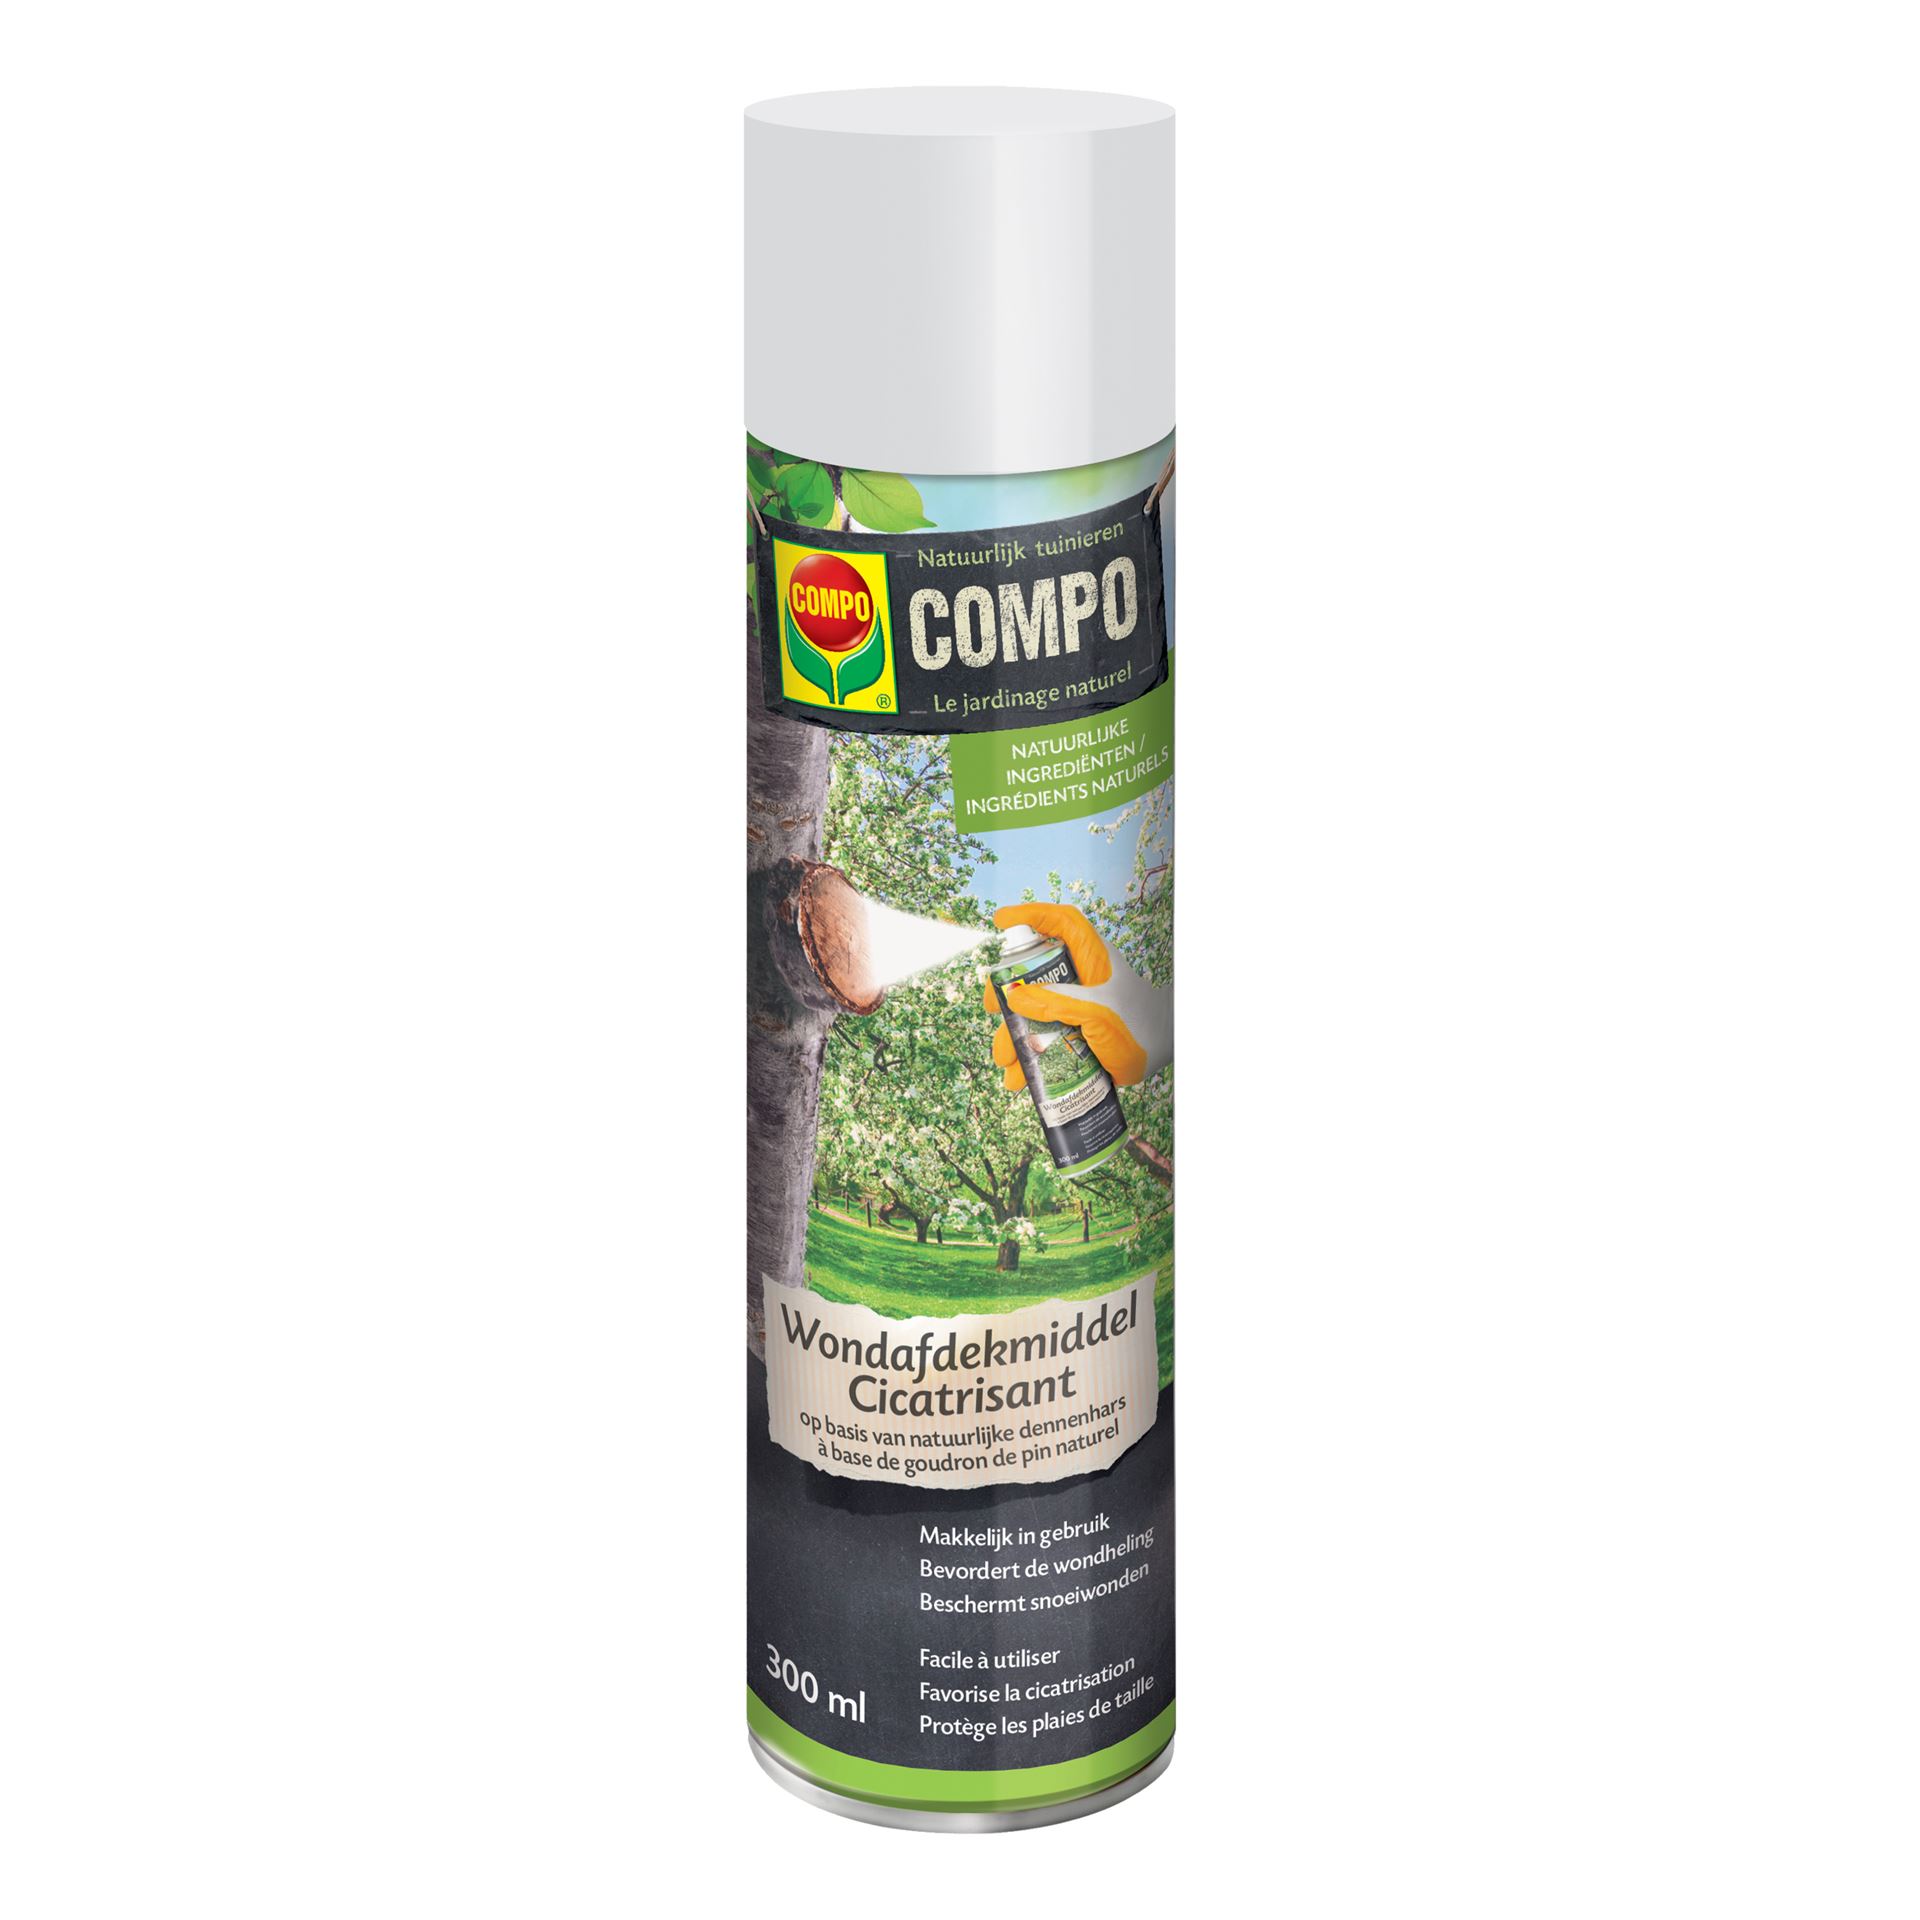 Compo-wondafdekmiddel-spray-300ml